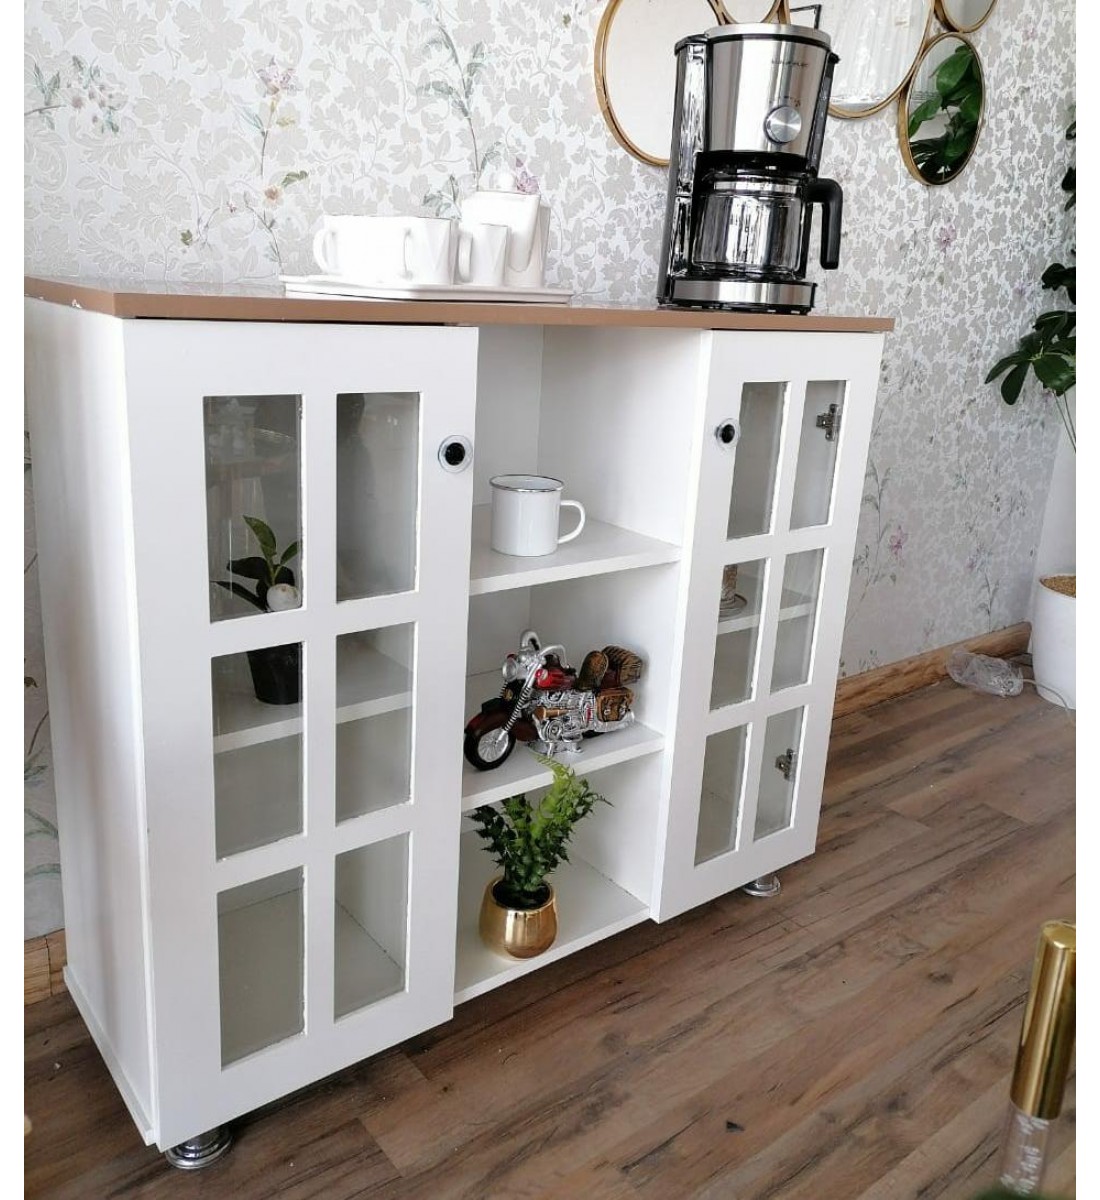 Coffee corner wood white color 100 * 90 * 33 cm